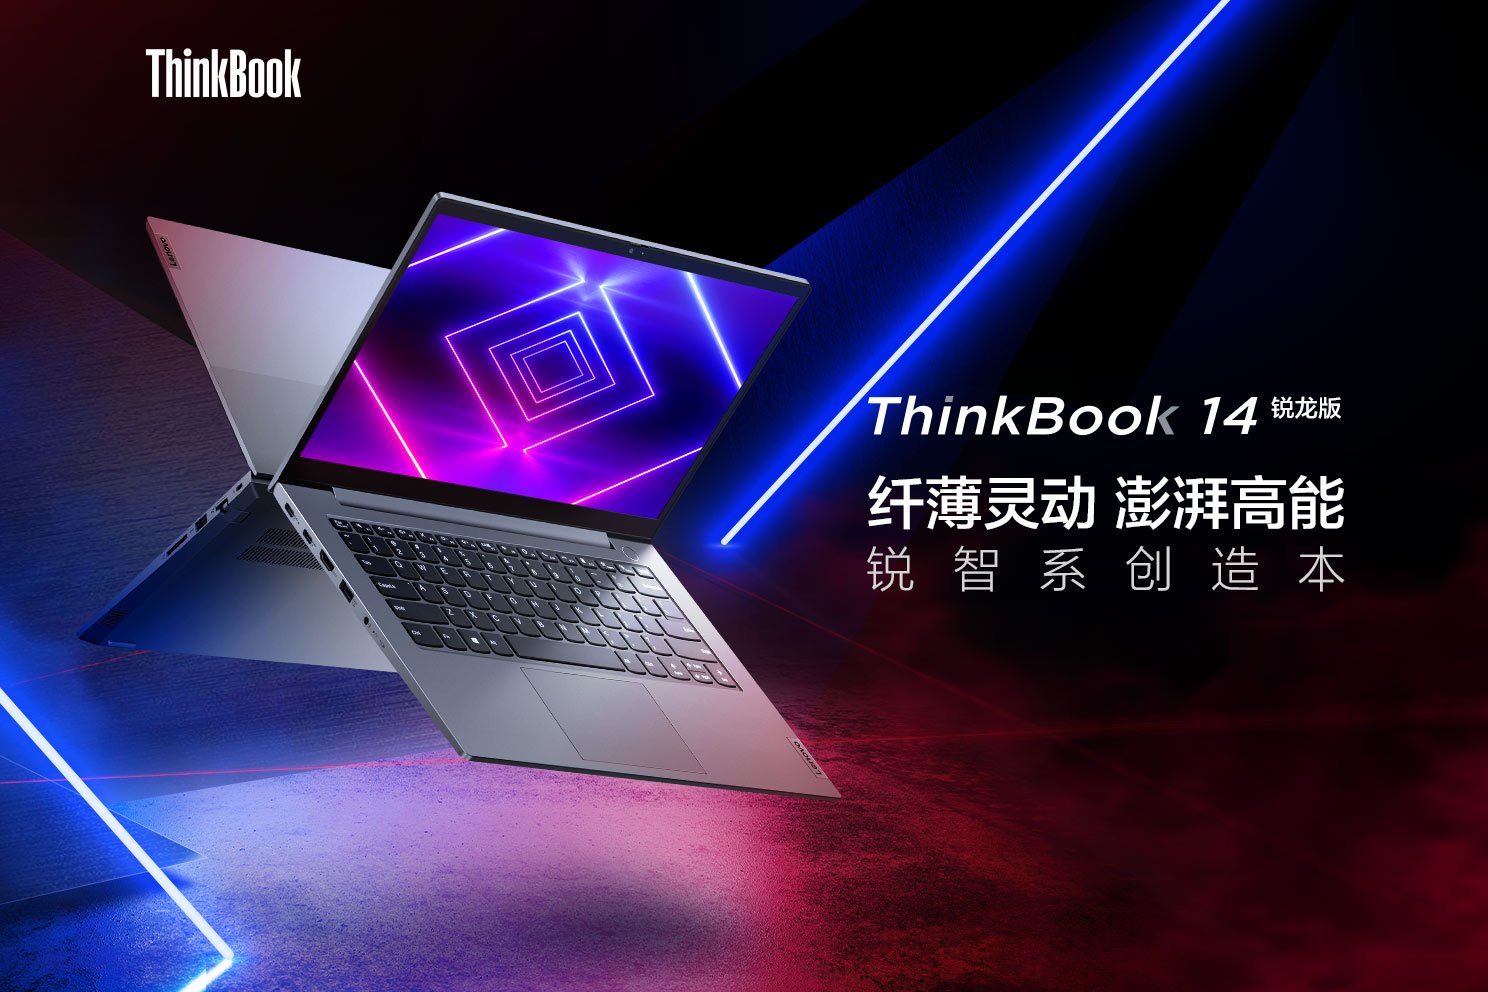 Lenovo ThinkBook 14 2021 refreshed with AMD Ryzen 5 5500U 